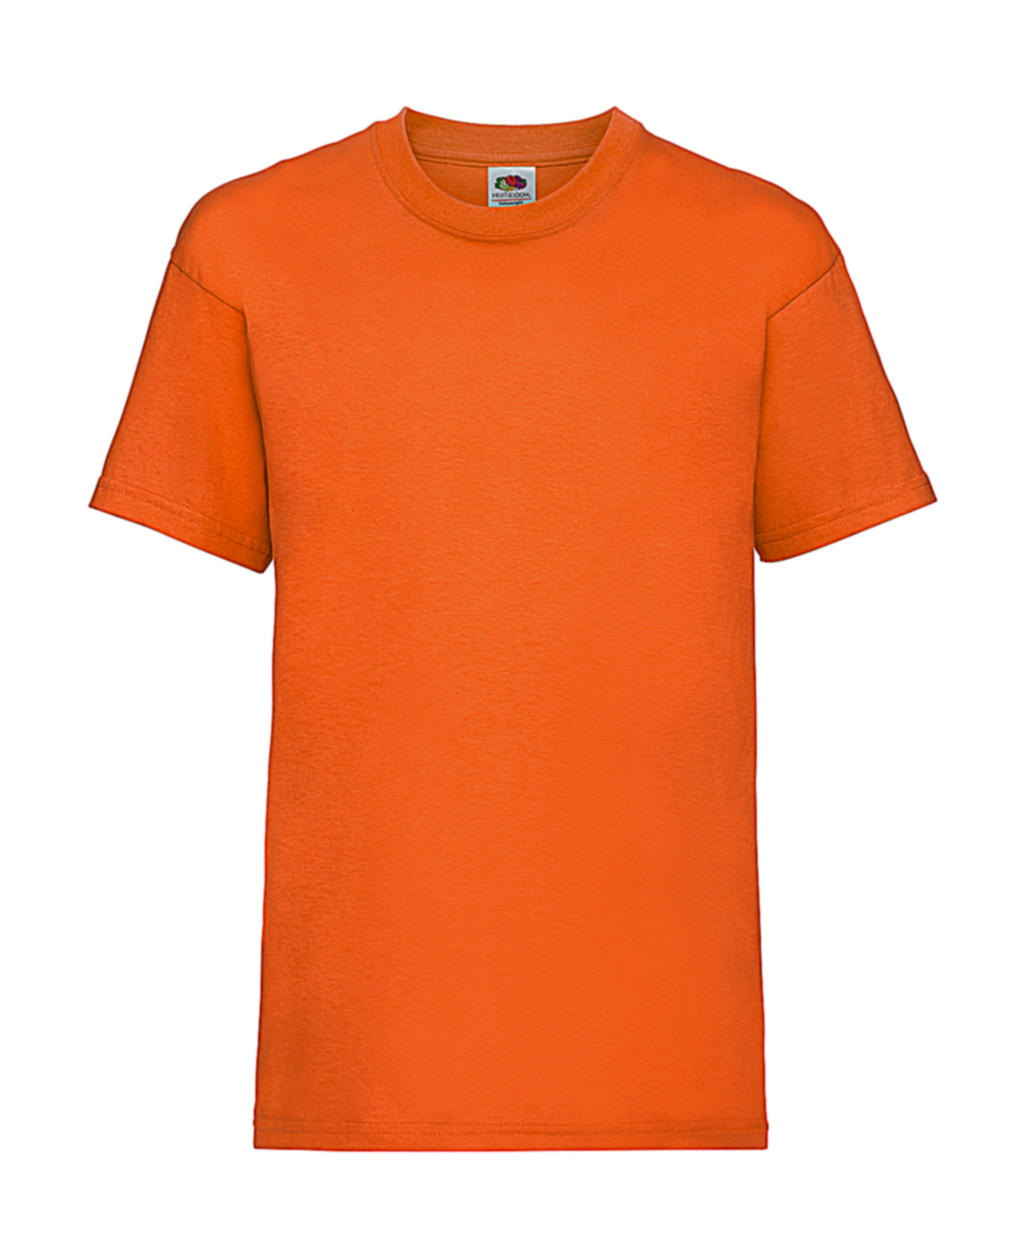  Kids Valueweight T in Farbe Orange